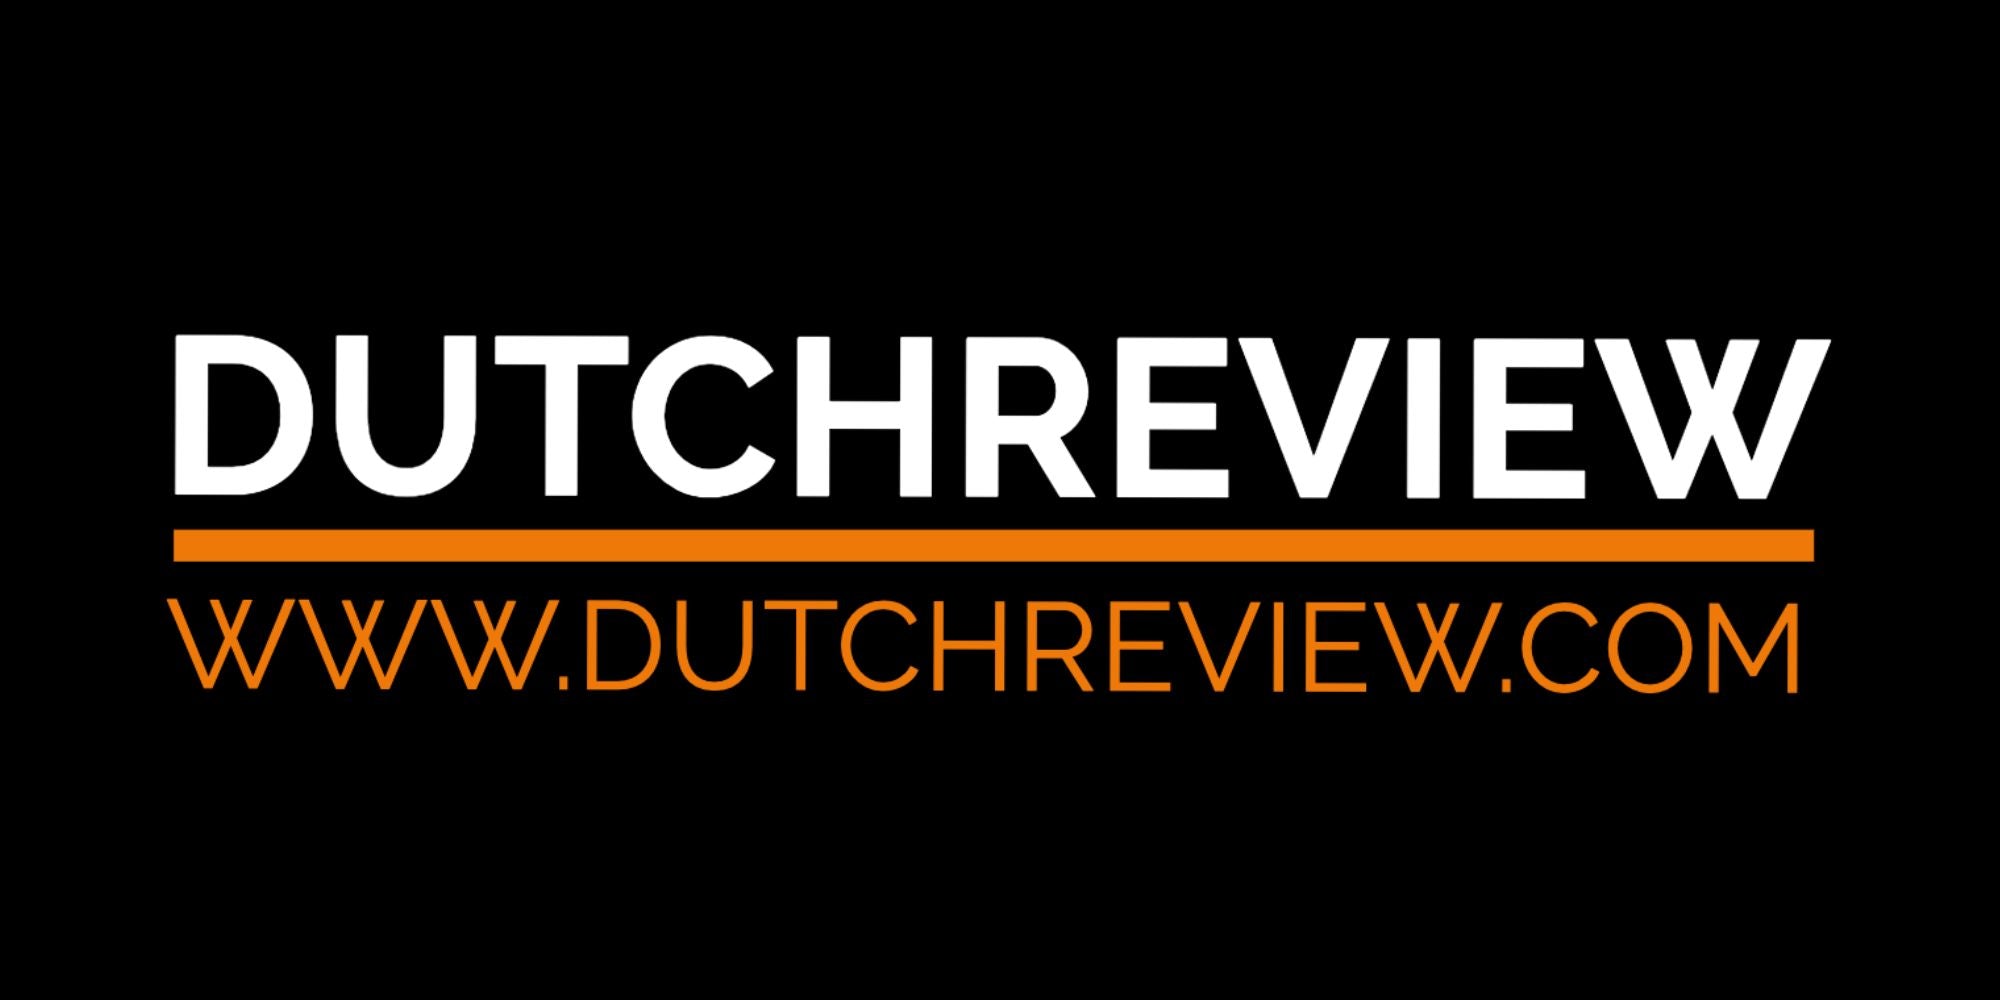 DutchReview ImmunoWars Boardgame Review